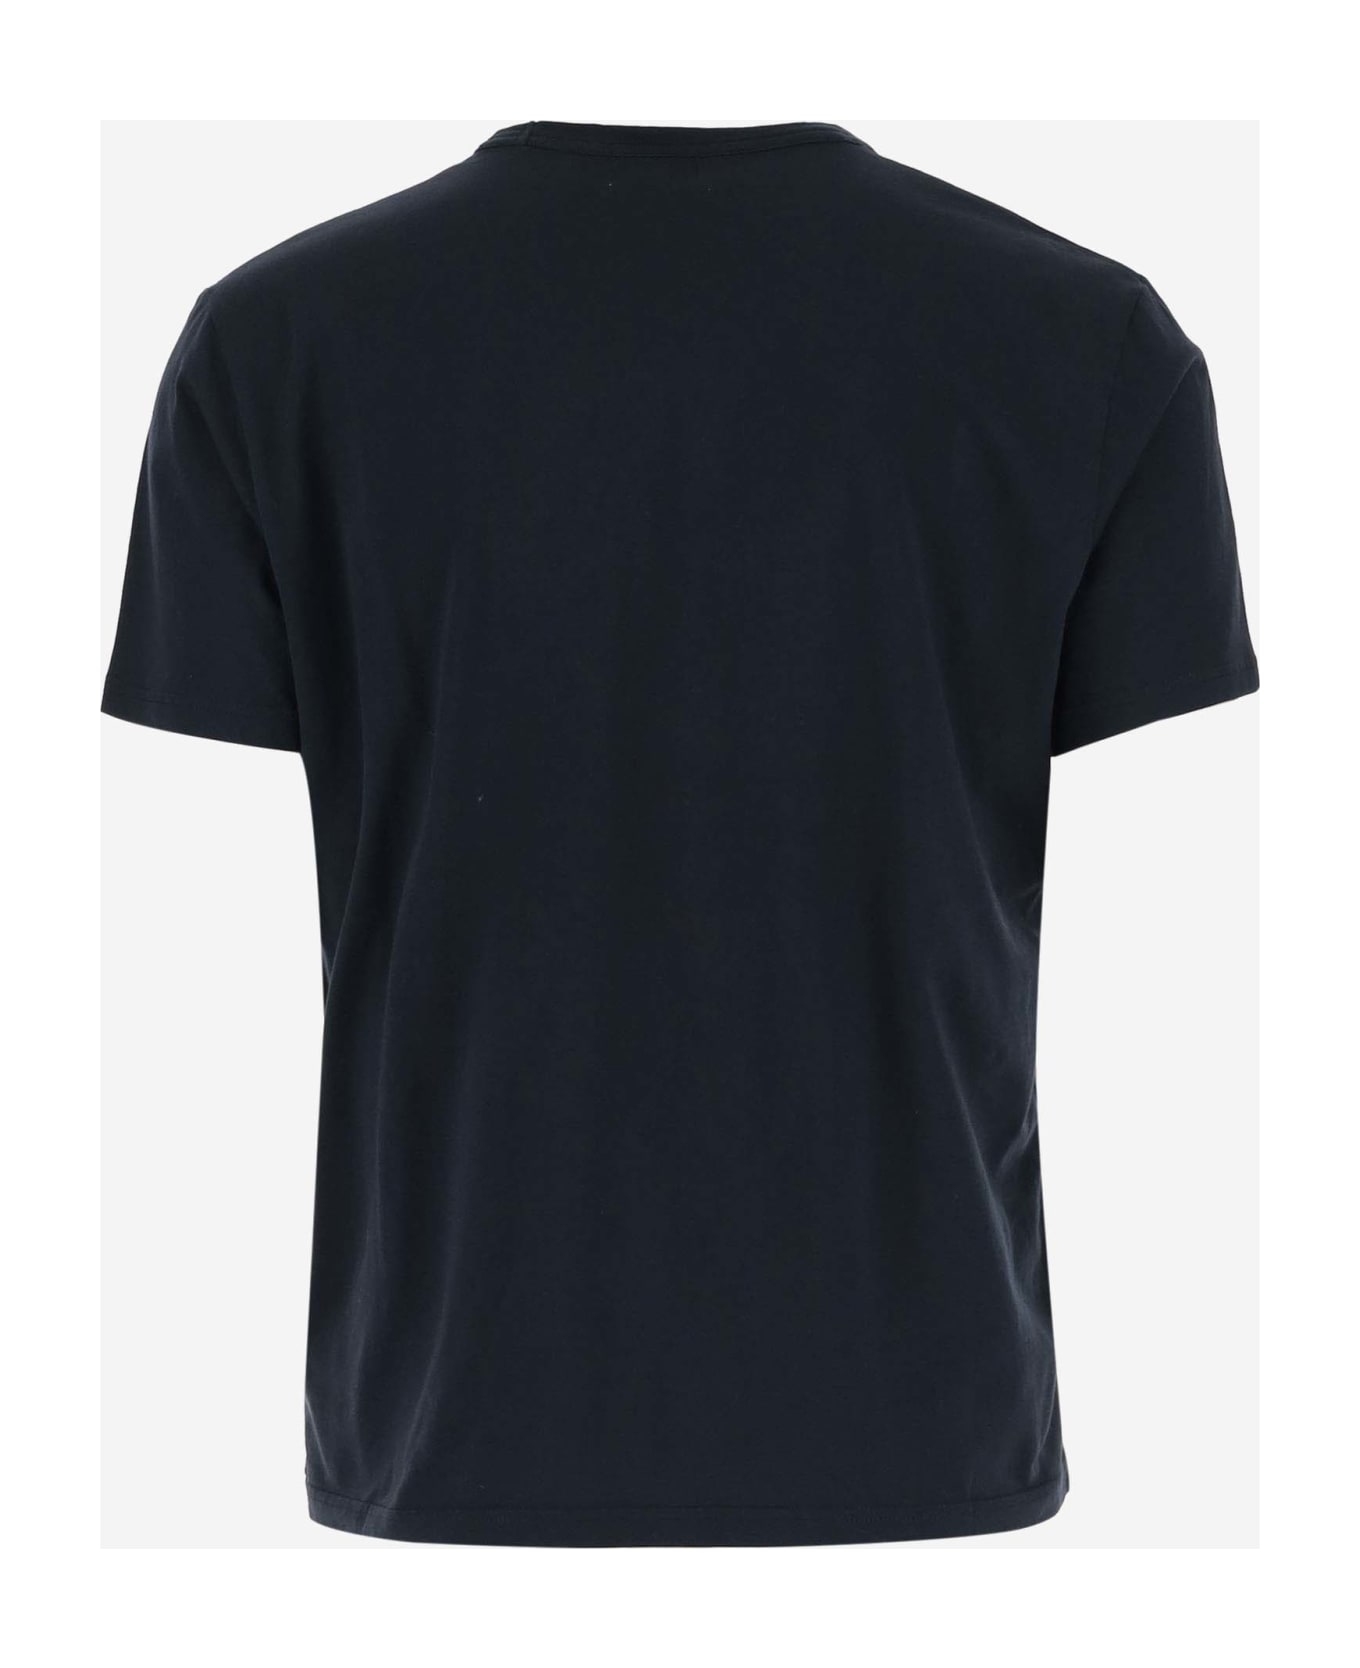 Woolrich Cotton T-shirt With Logo - Blu